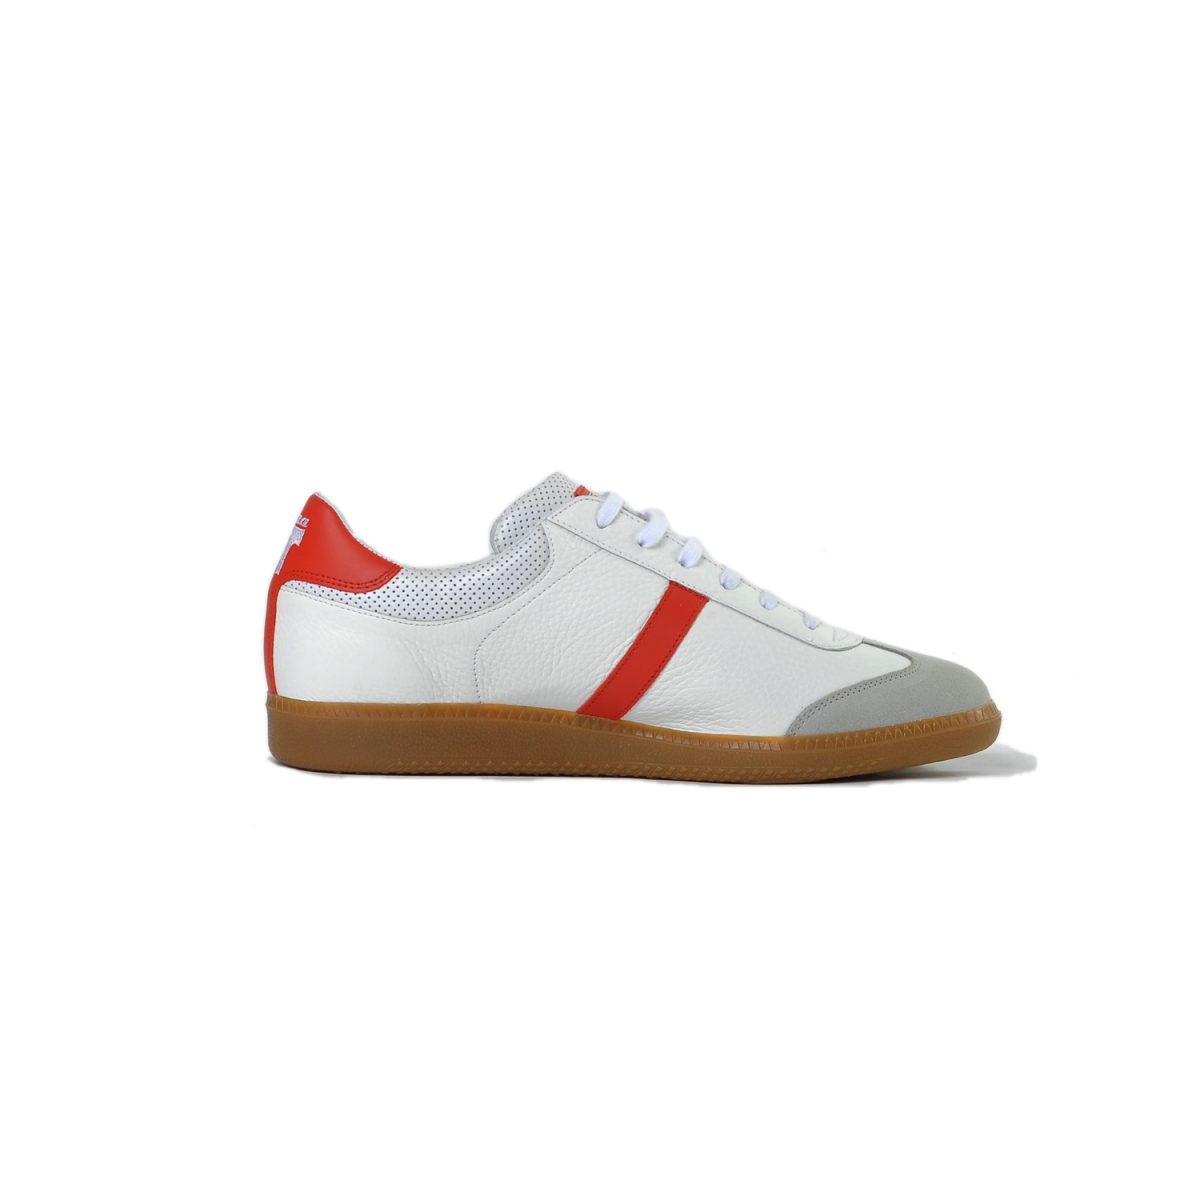 Tisza shoes - Compakt - White-red